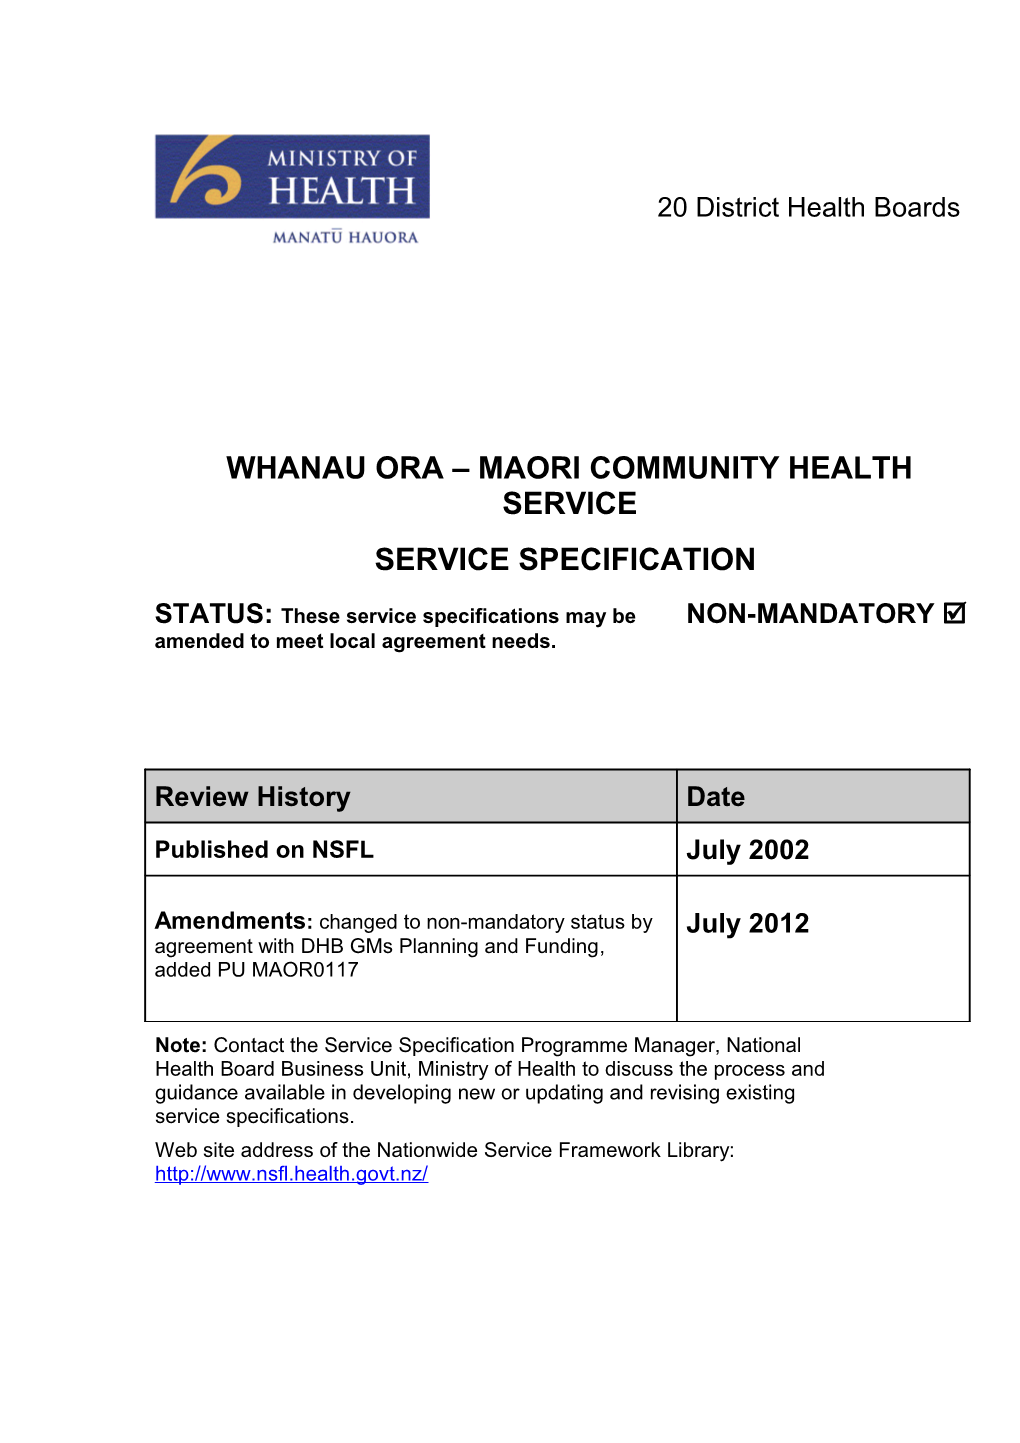 Whanau Ora Maori Community Health Service